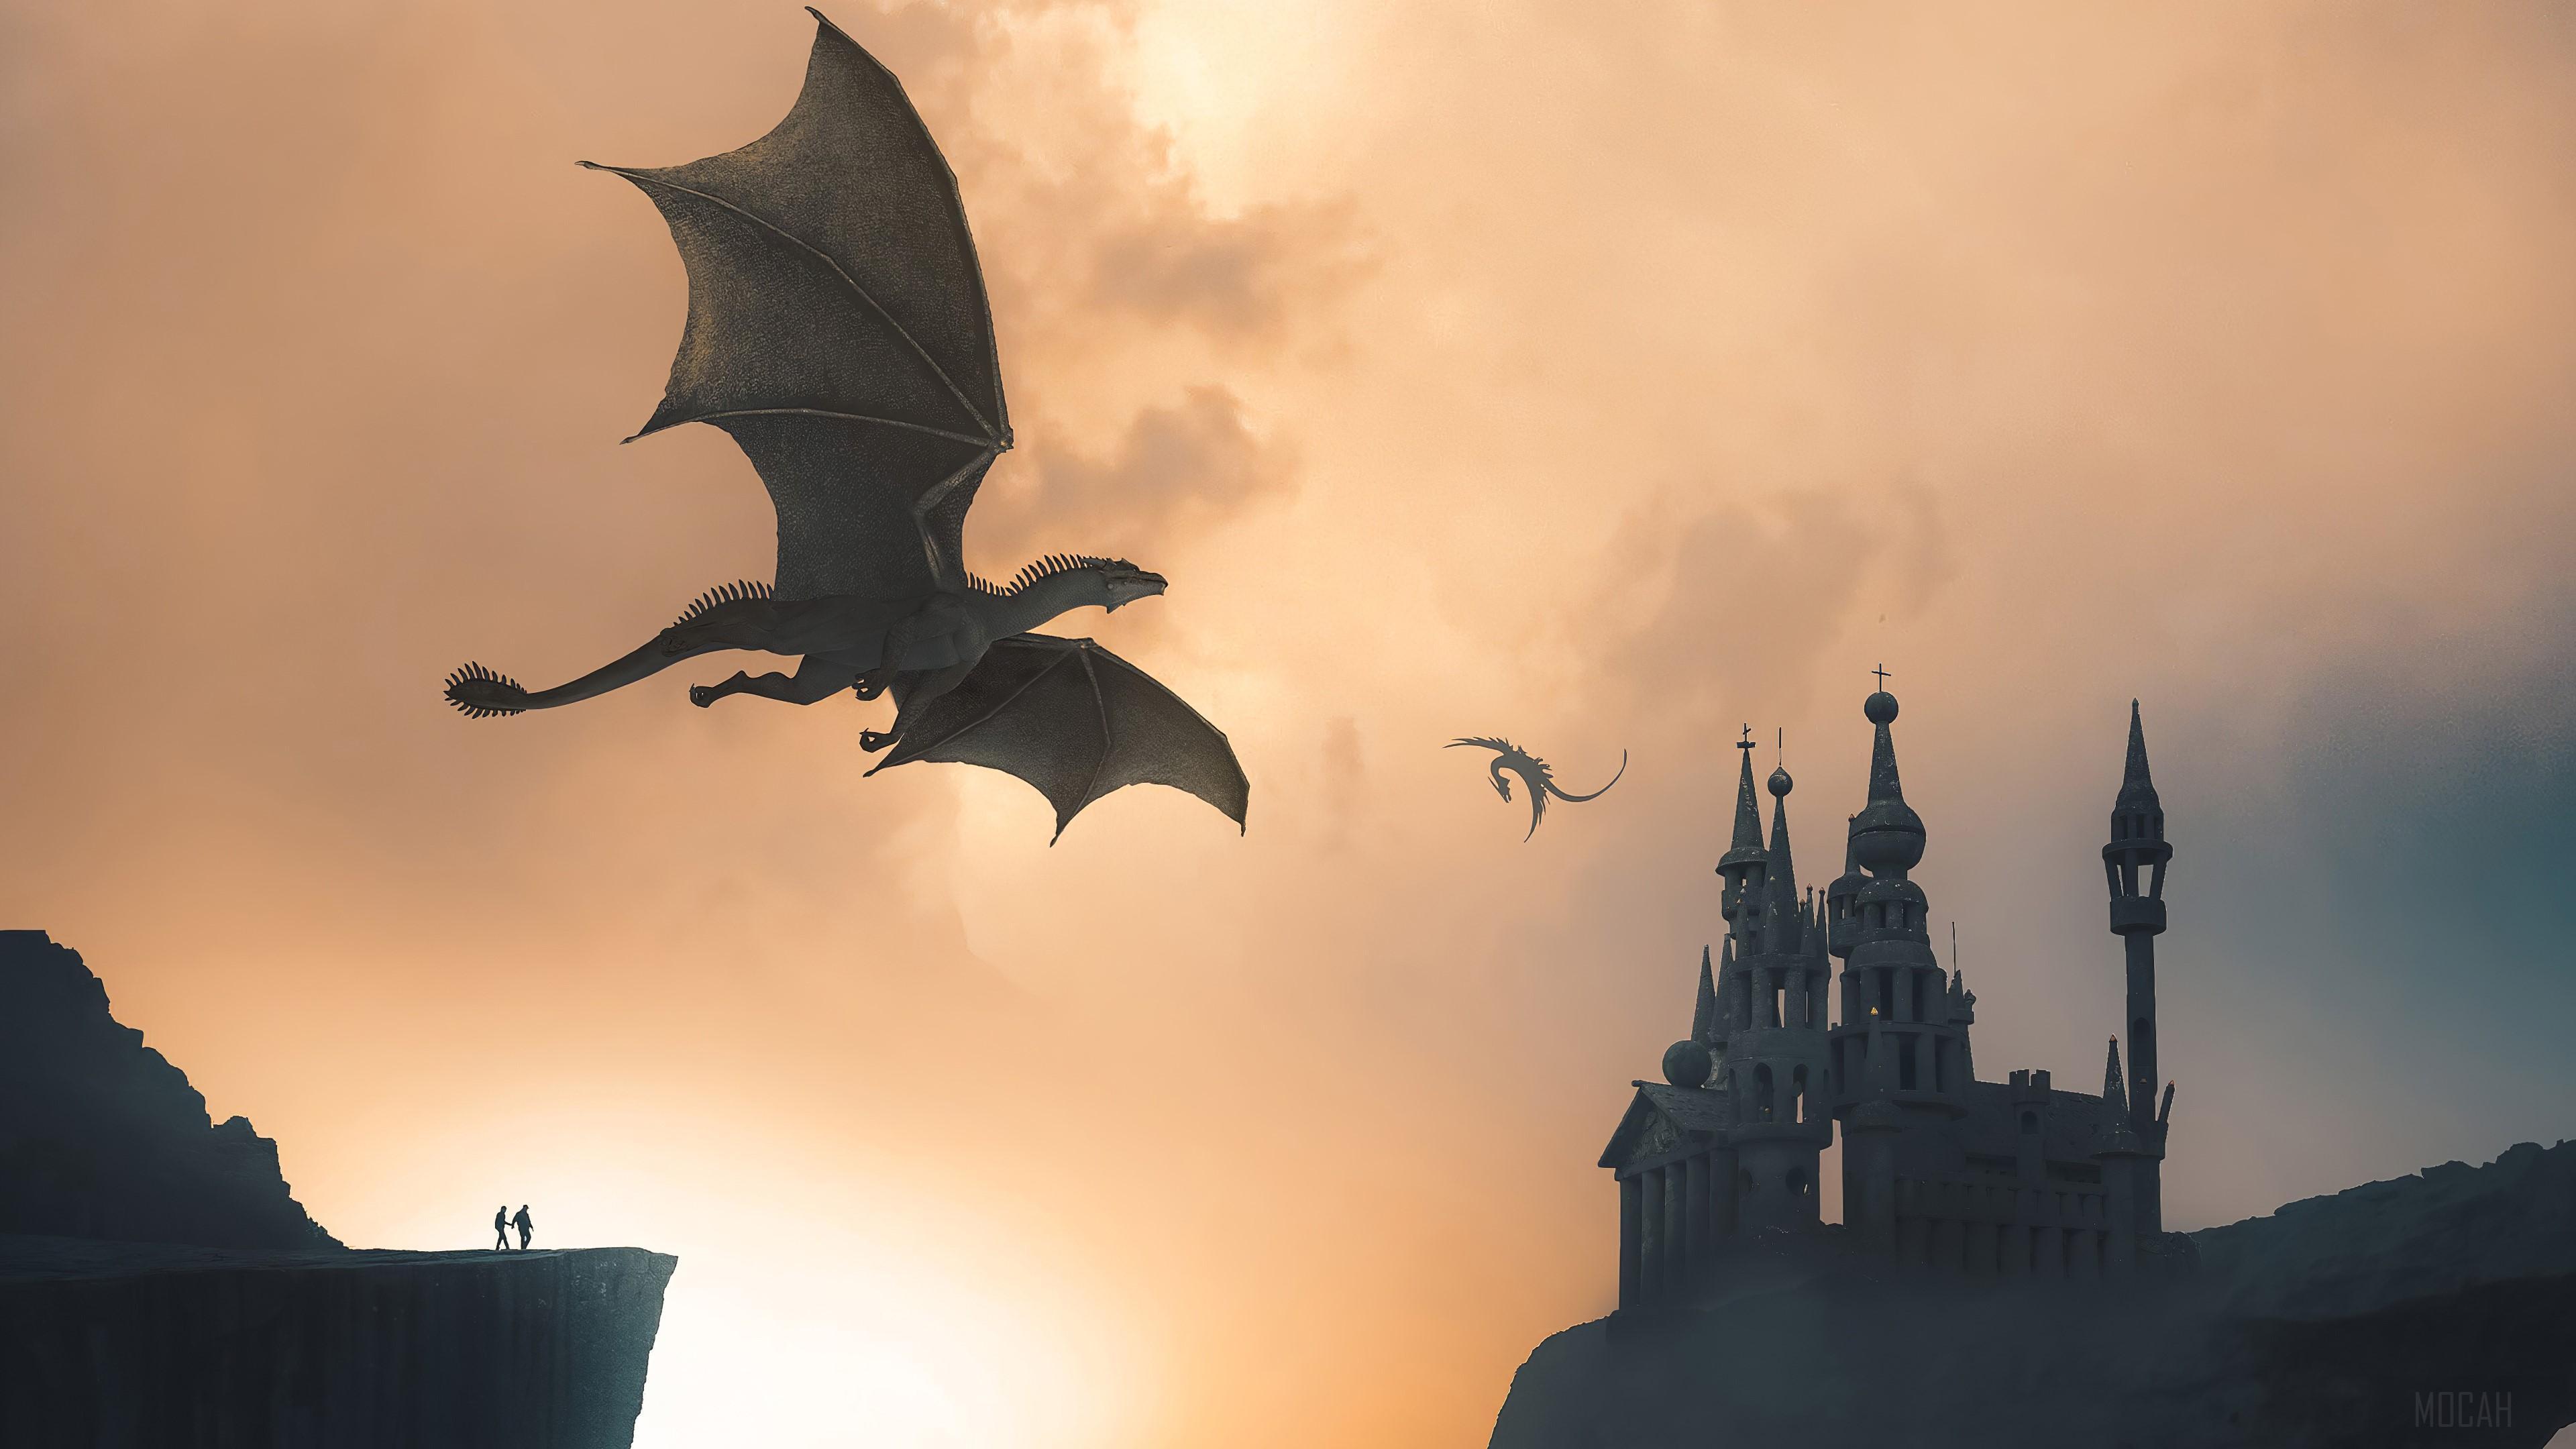 HD wallpaper, Dragons Worship To Throne 4K